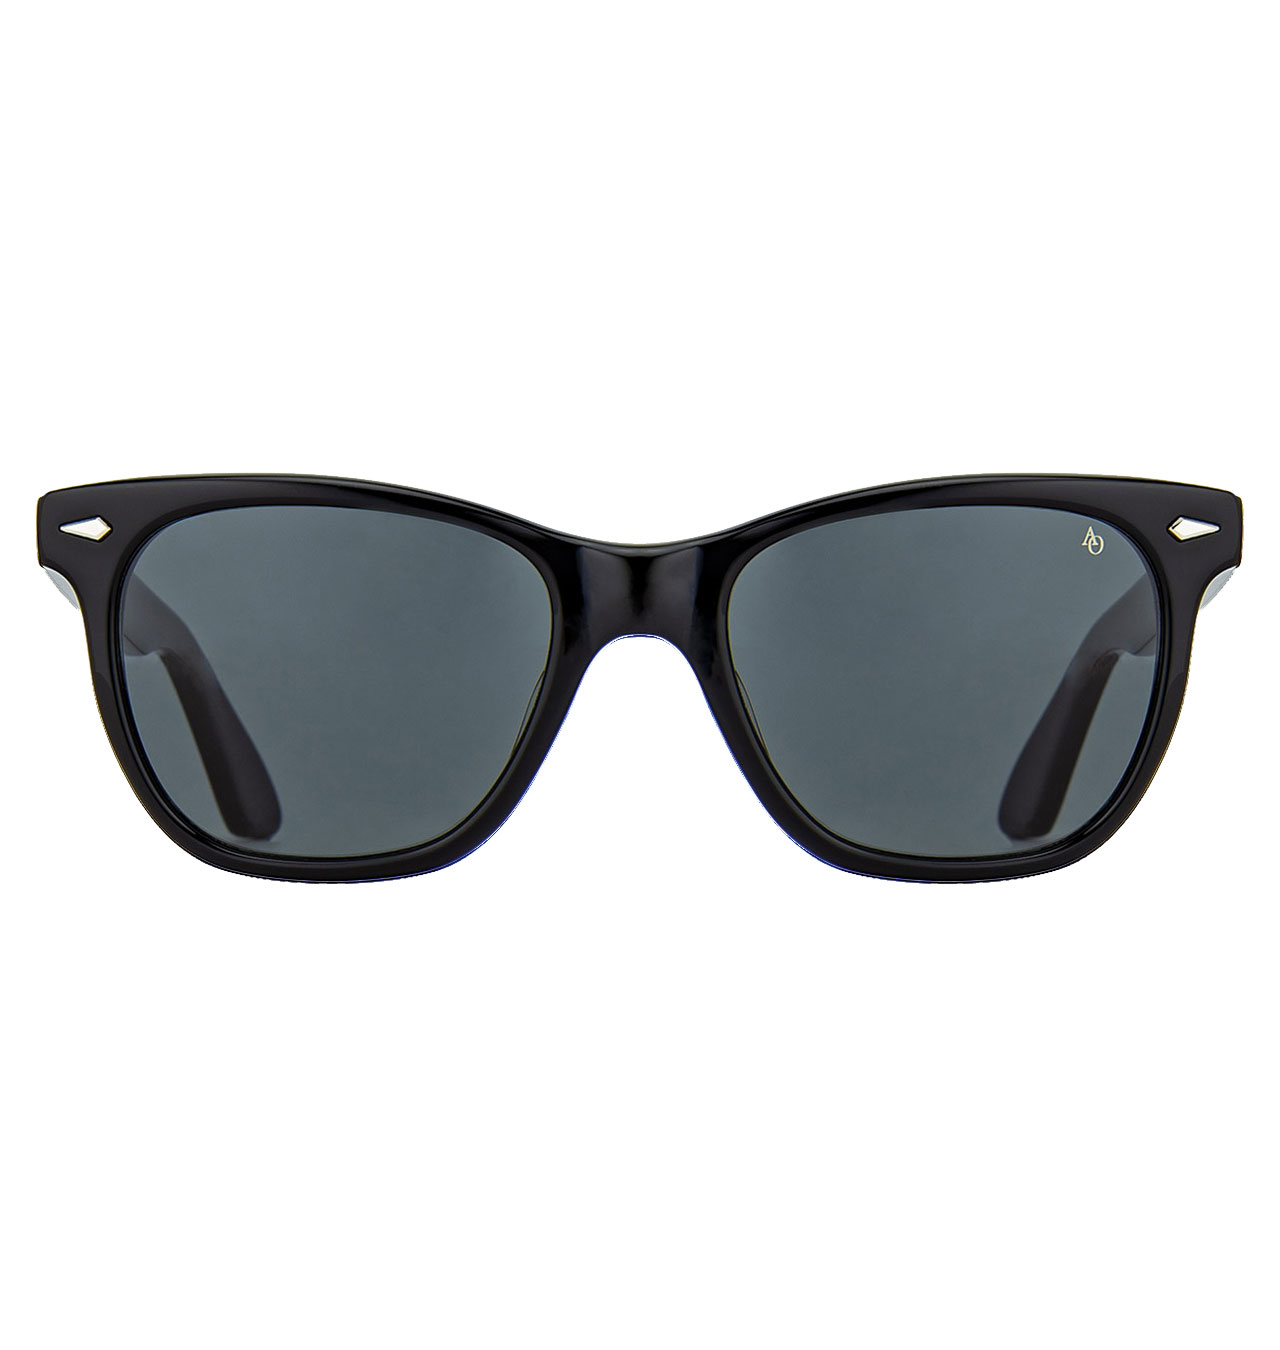 American Optical - Saratoga Sunglasses - Black